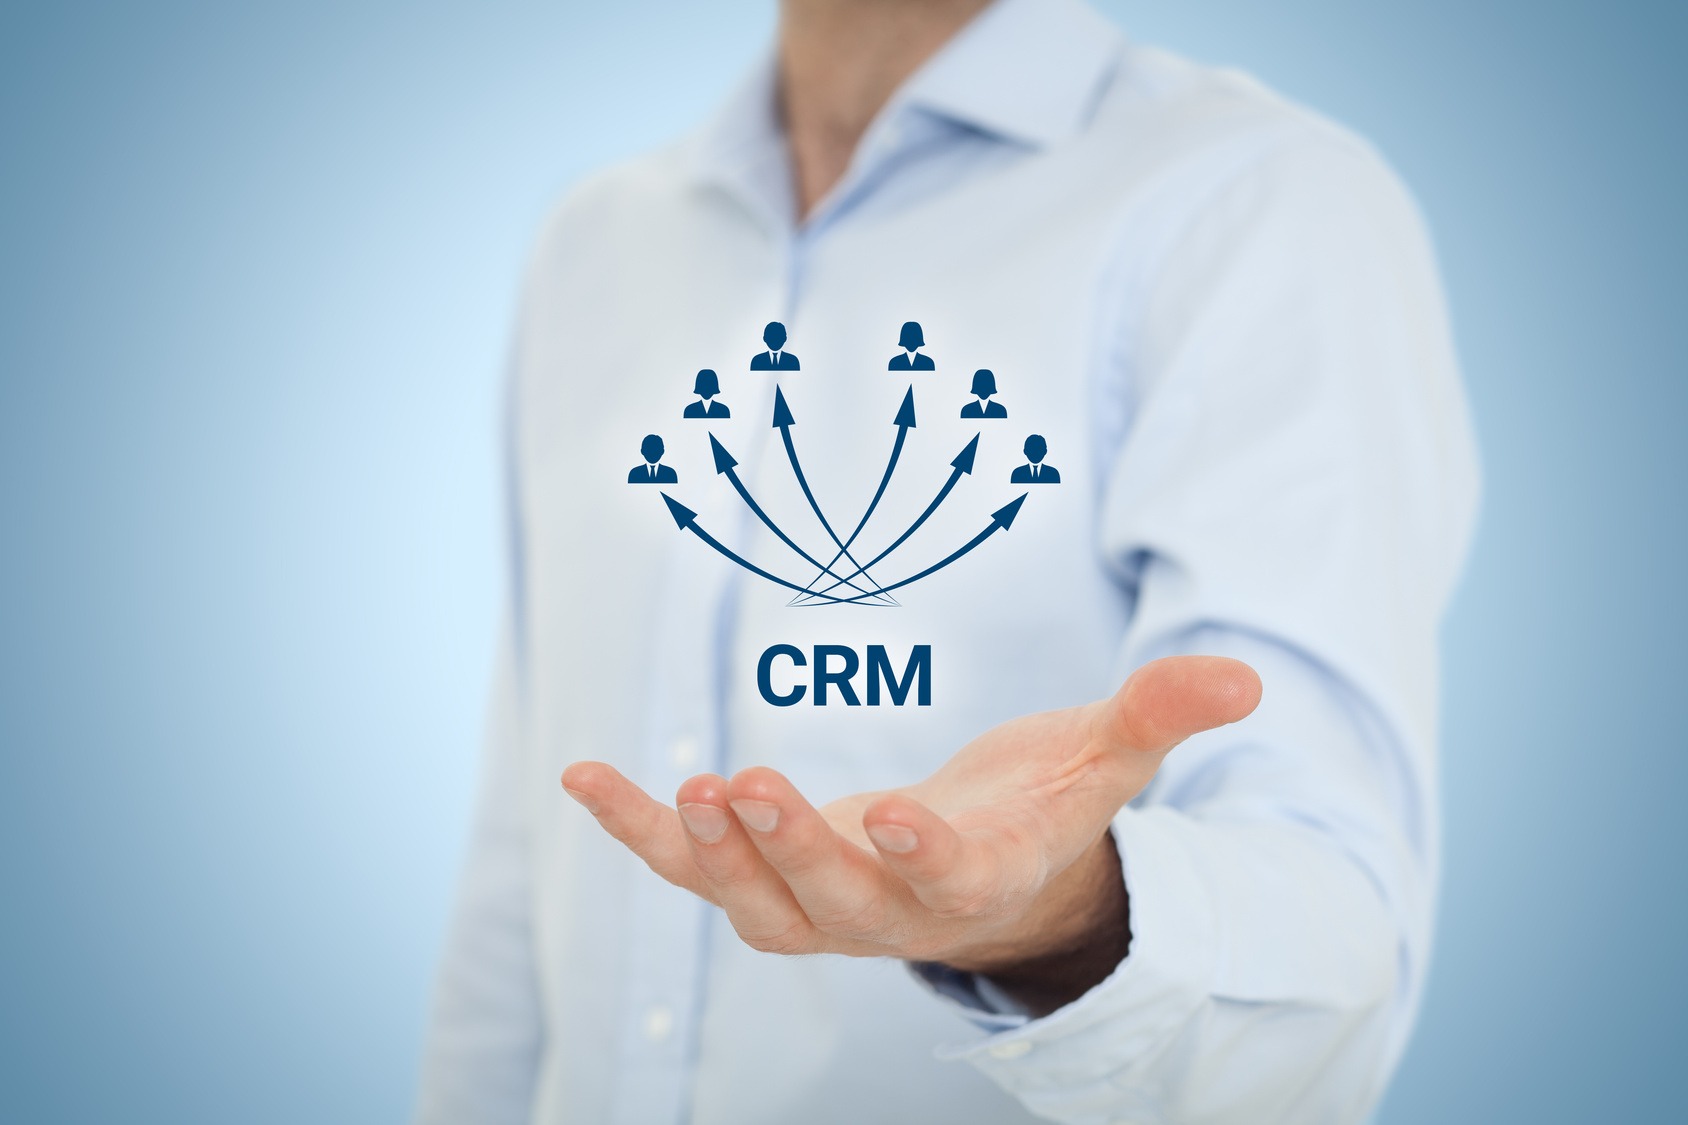 Customer relationship management (CRM) concept. Businessman hold virtual scheme representing CRM.